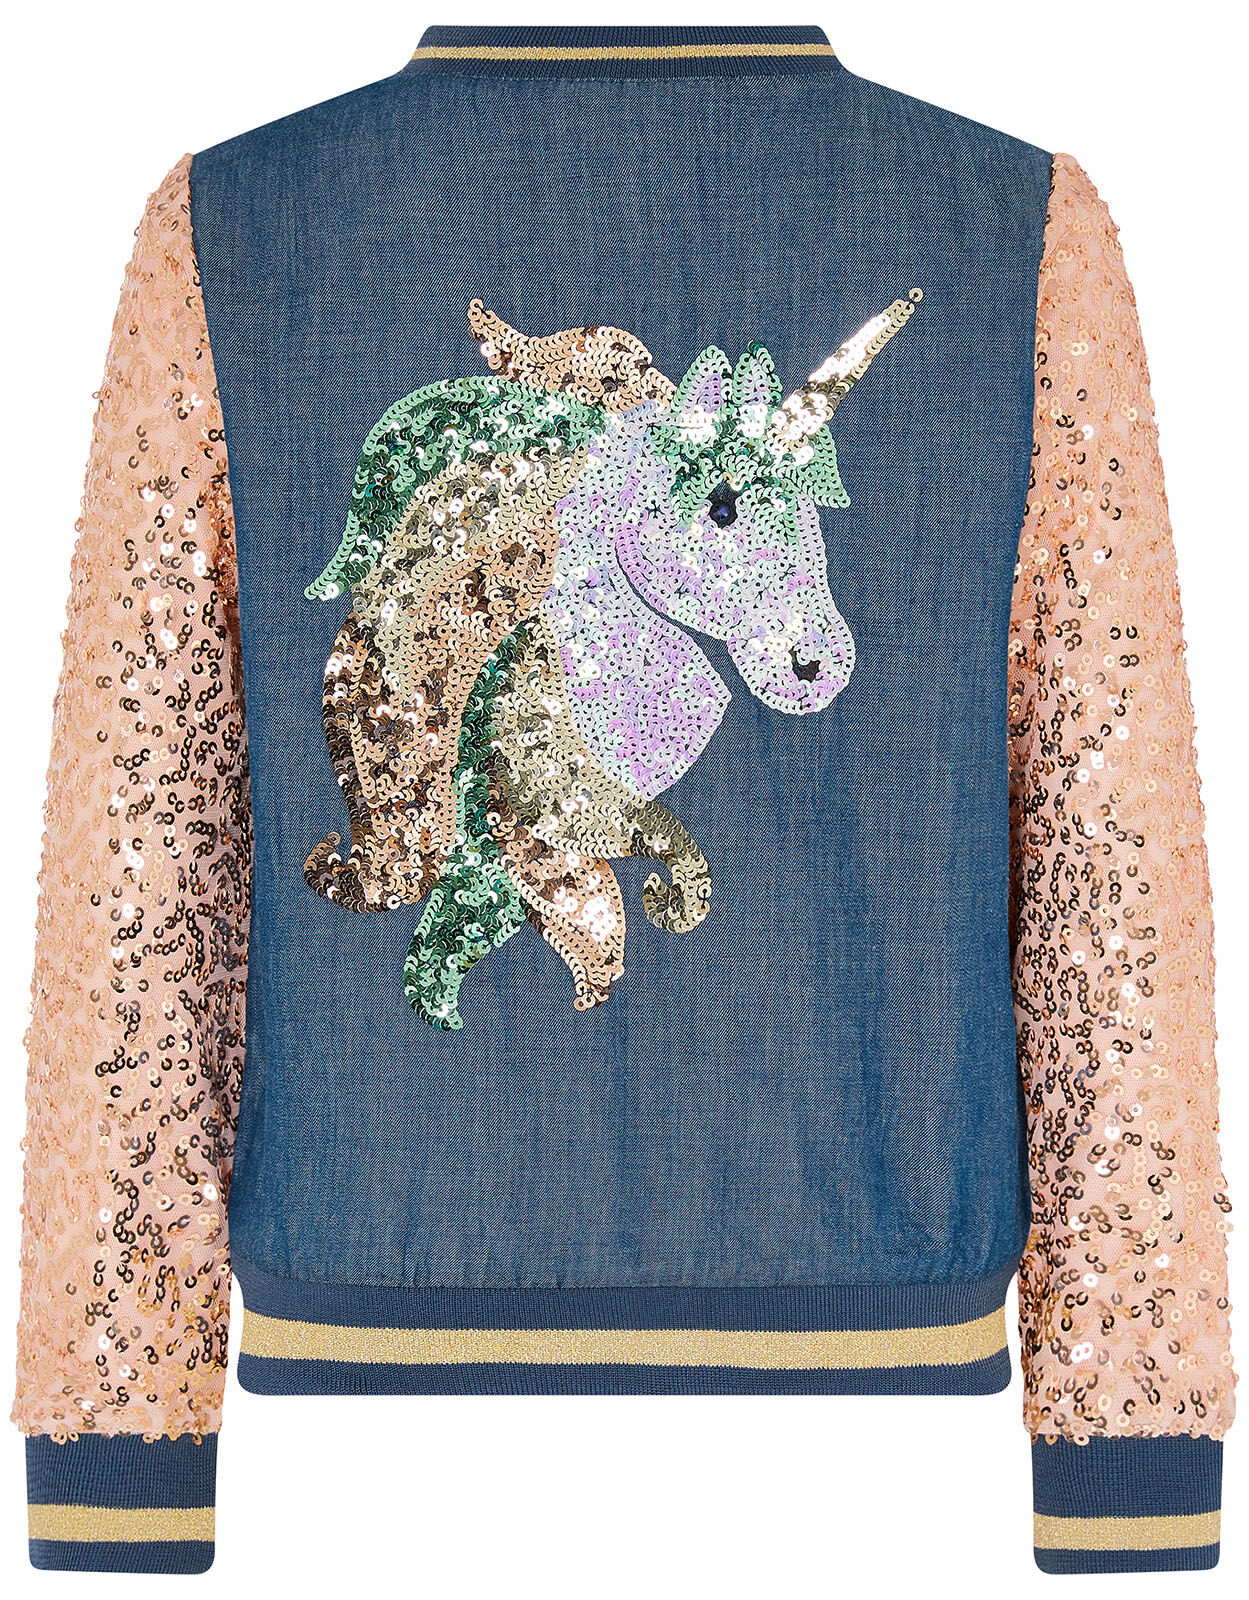 My Cute Unicorn Big Girl Unicorn Denim Jacket Sequins Jacket Outerwear Teen Girls/Little Girl